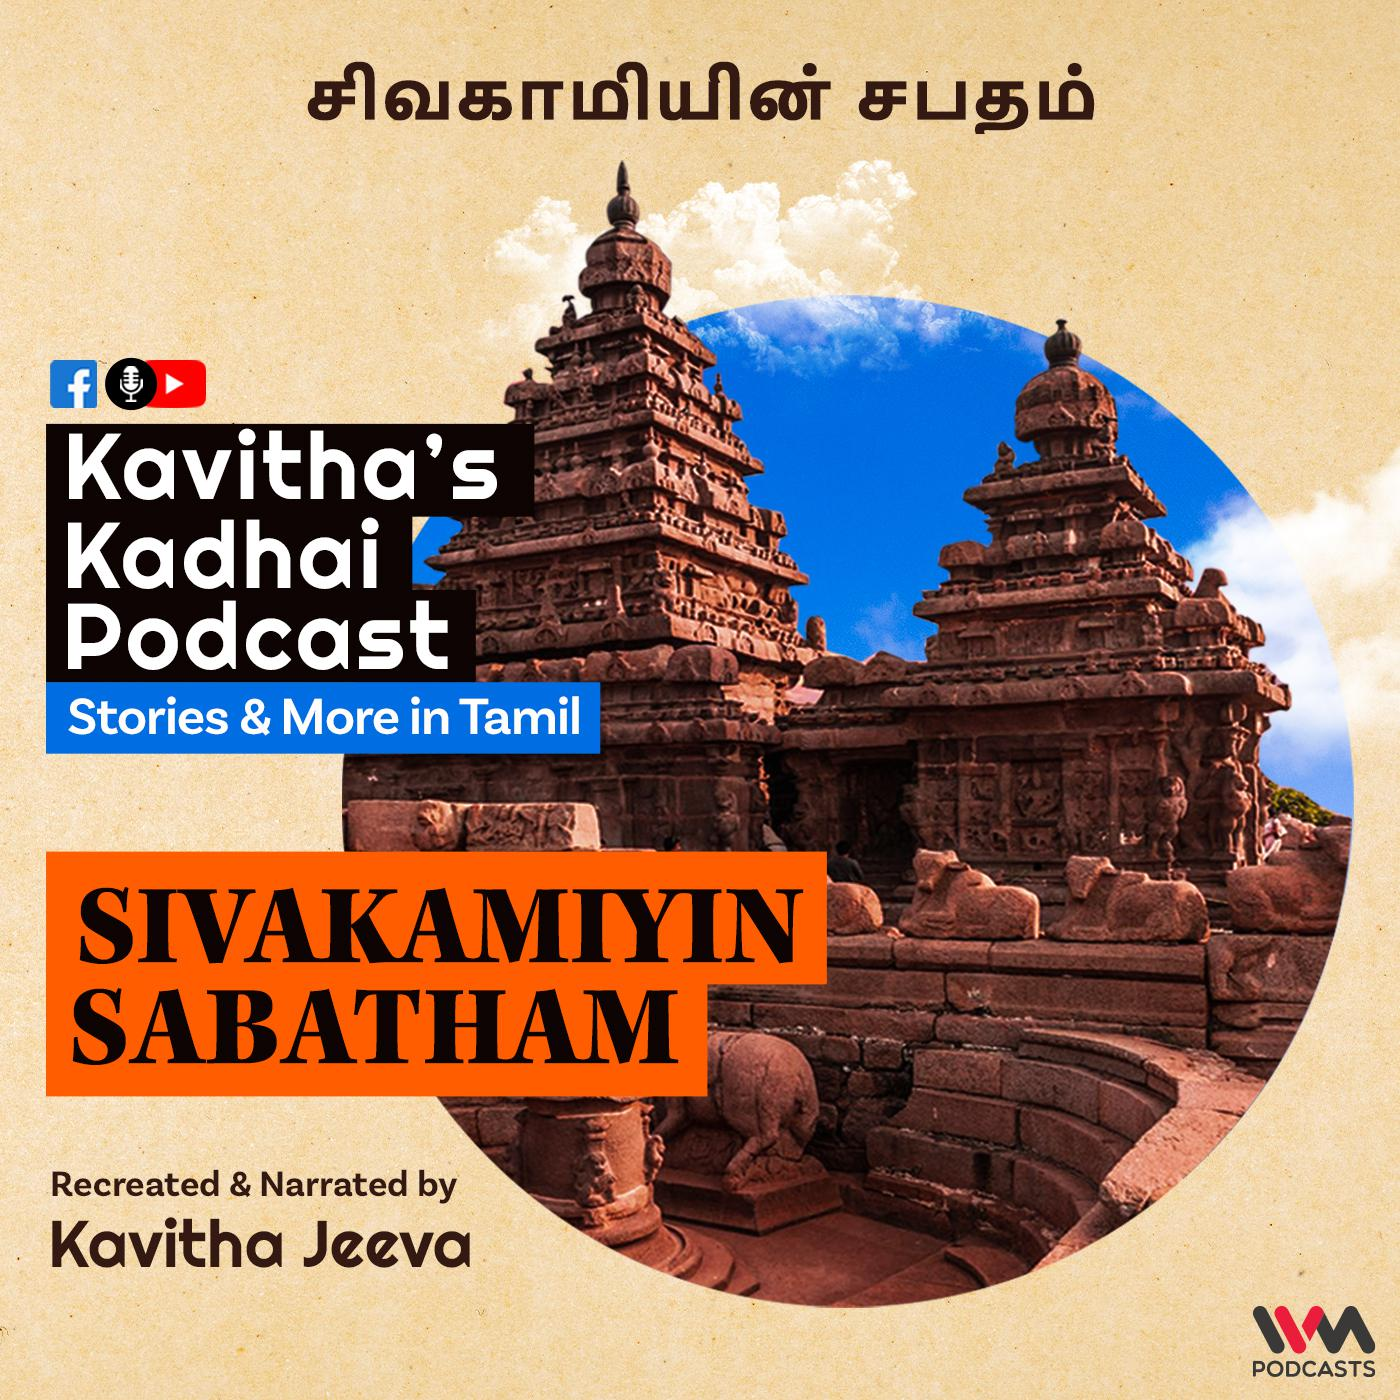 KadhaiPodcast's Sivakamiyin Sabatham with Kavitha Jeeva - Episode #129